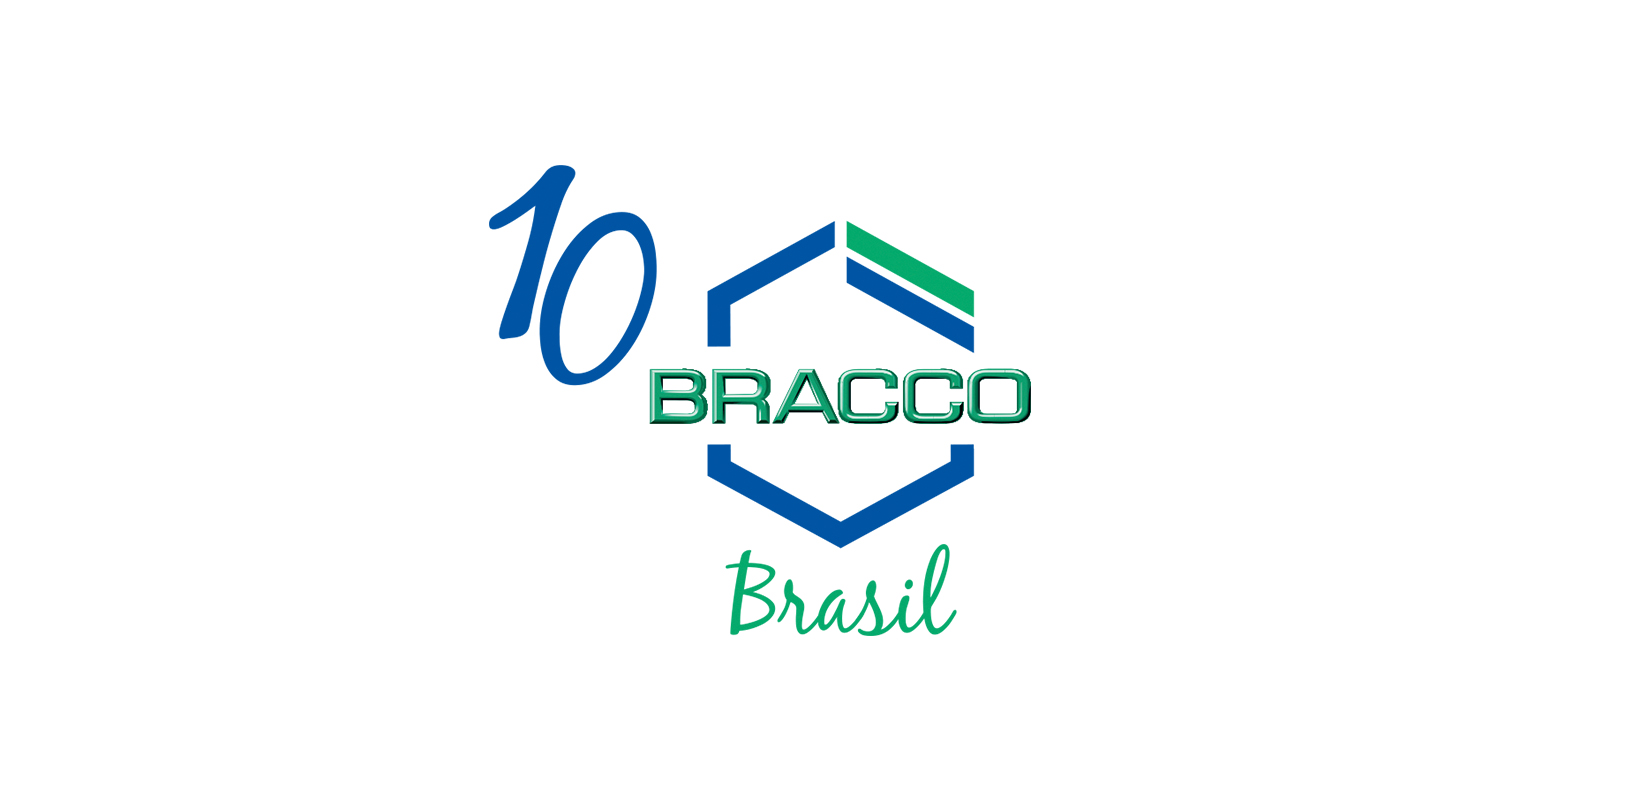 Bracco 10 anos de Brasil